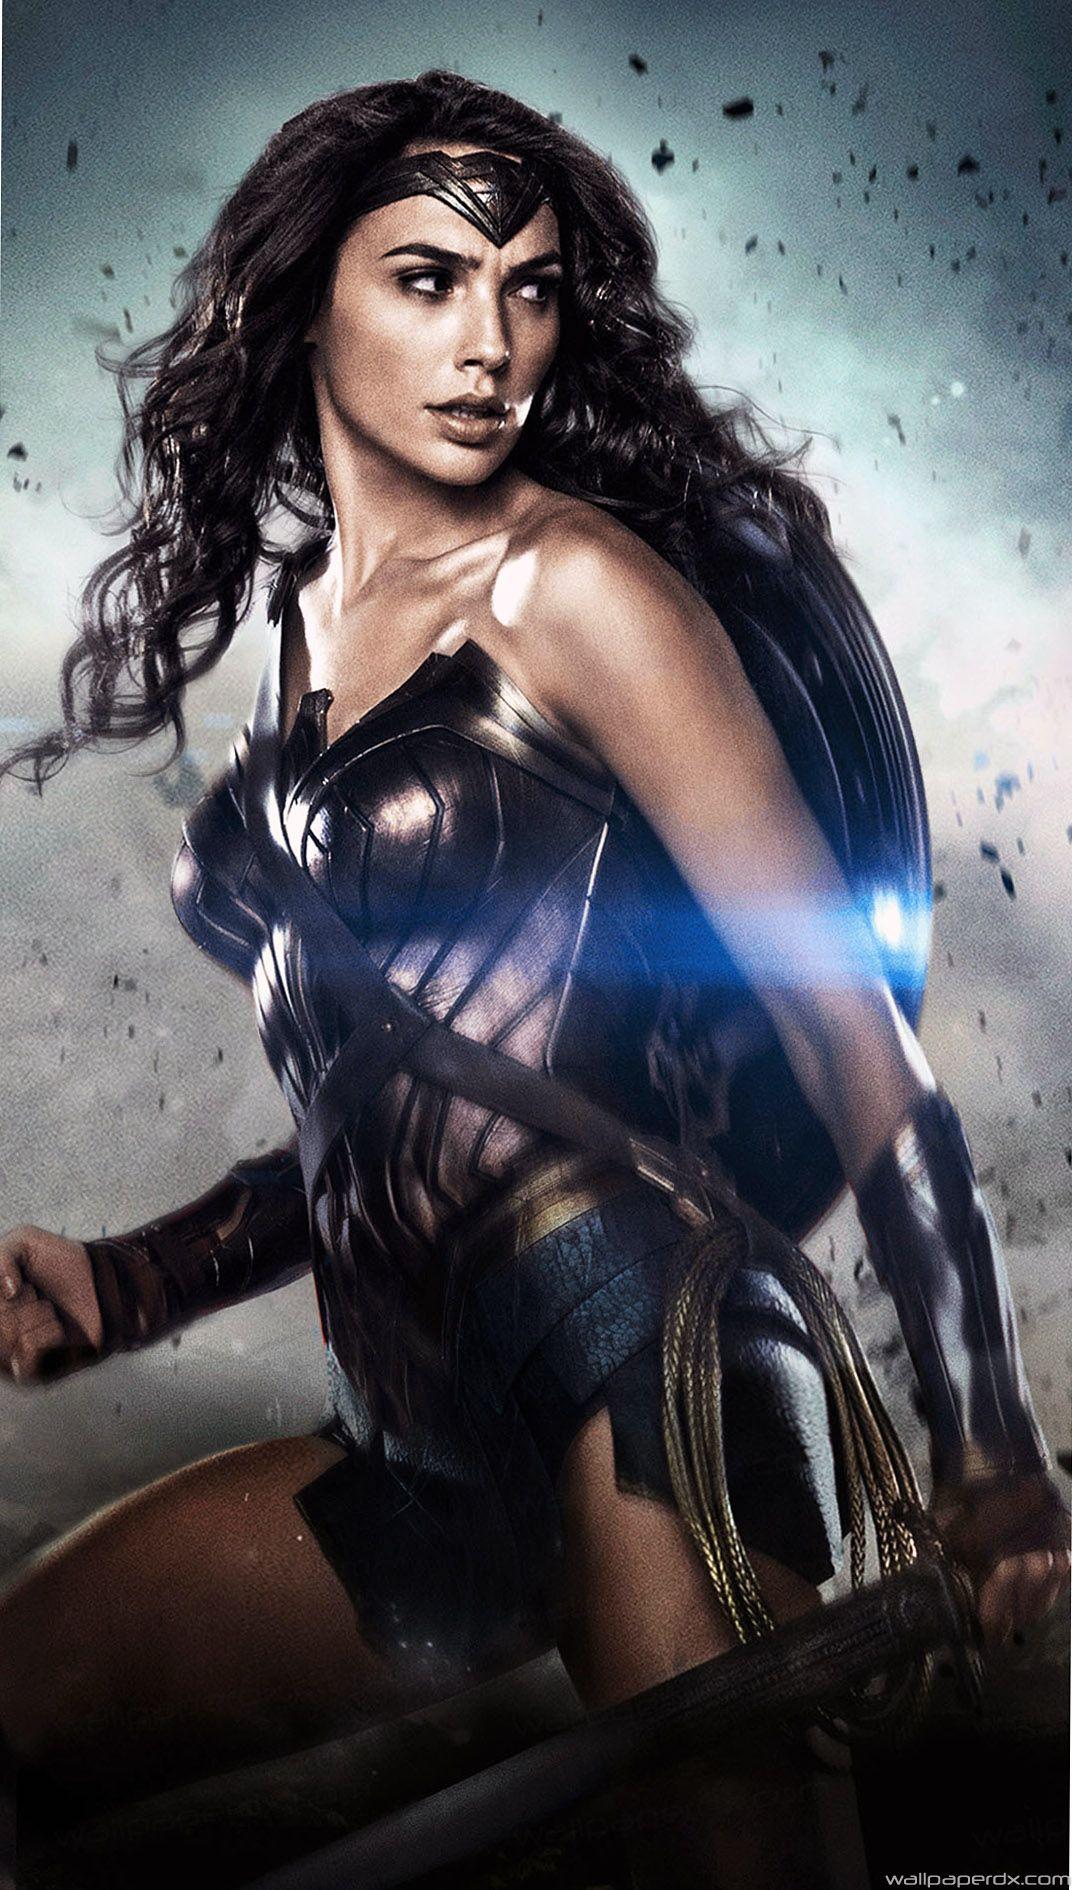 Wonder Woman iPhone Wallpapers - Top Free Wonder Woman iPhone ...